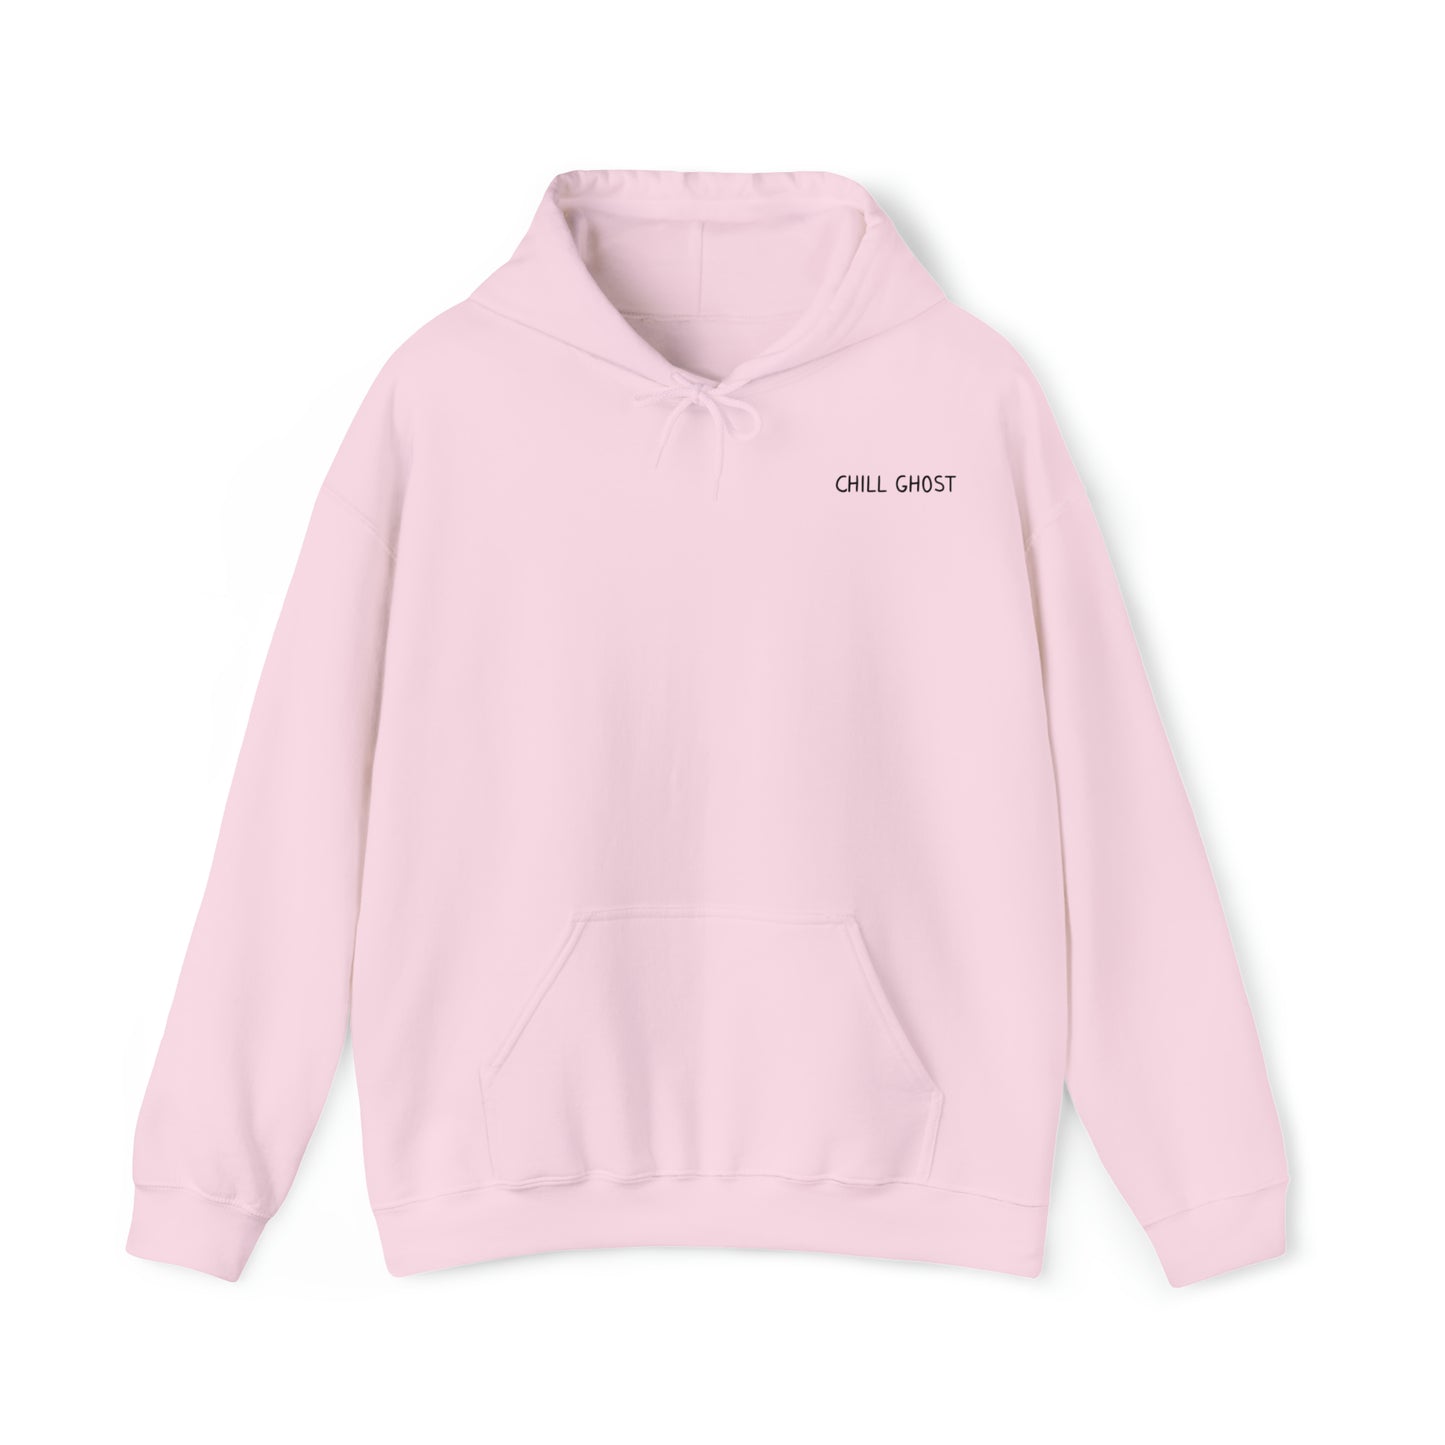 Fuji Pink Blossom - Unisex Hoodie